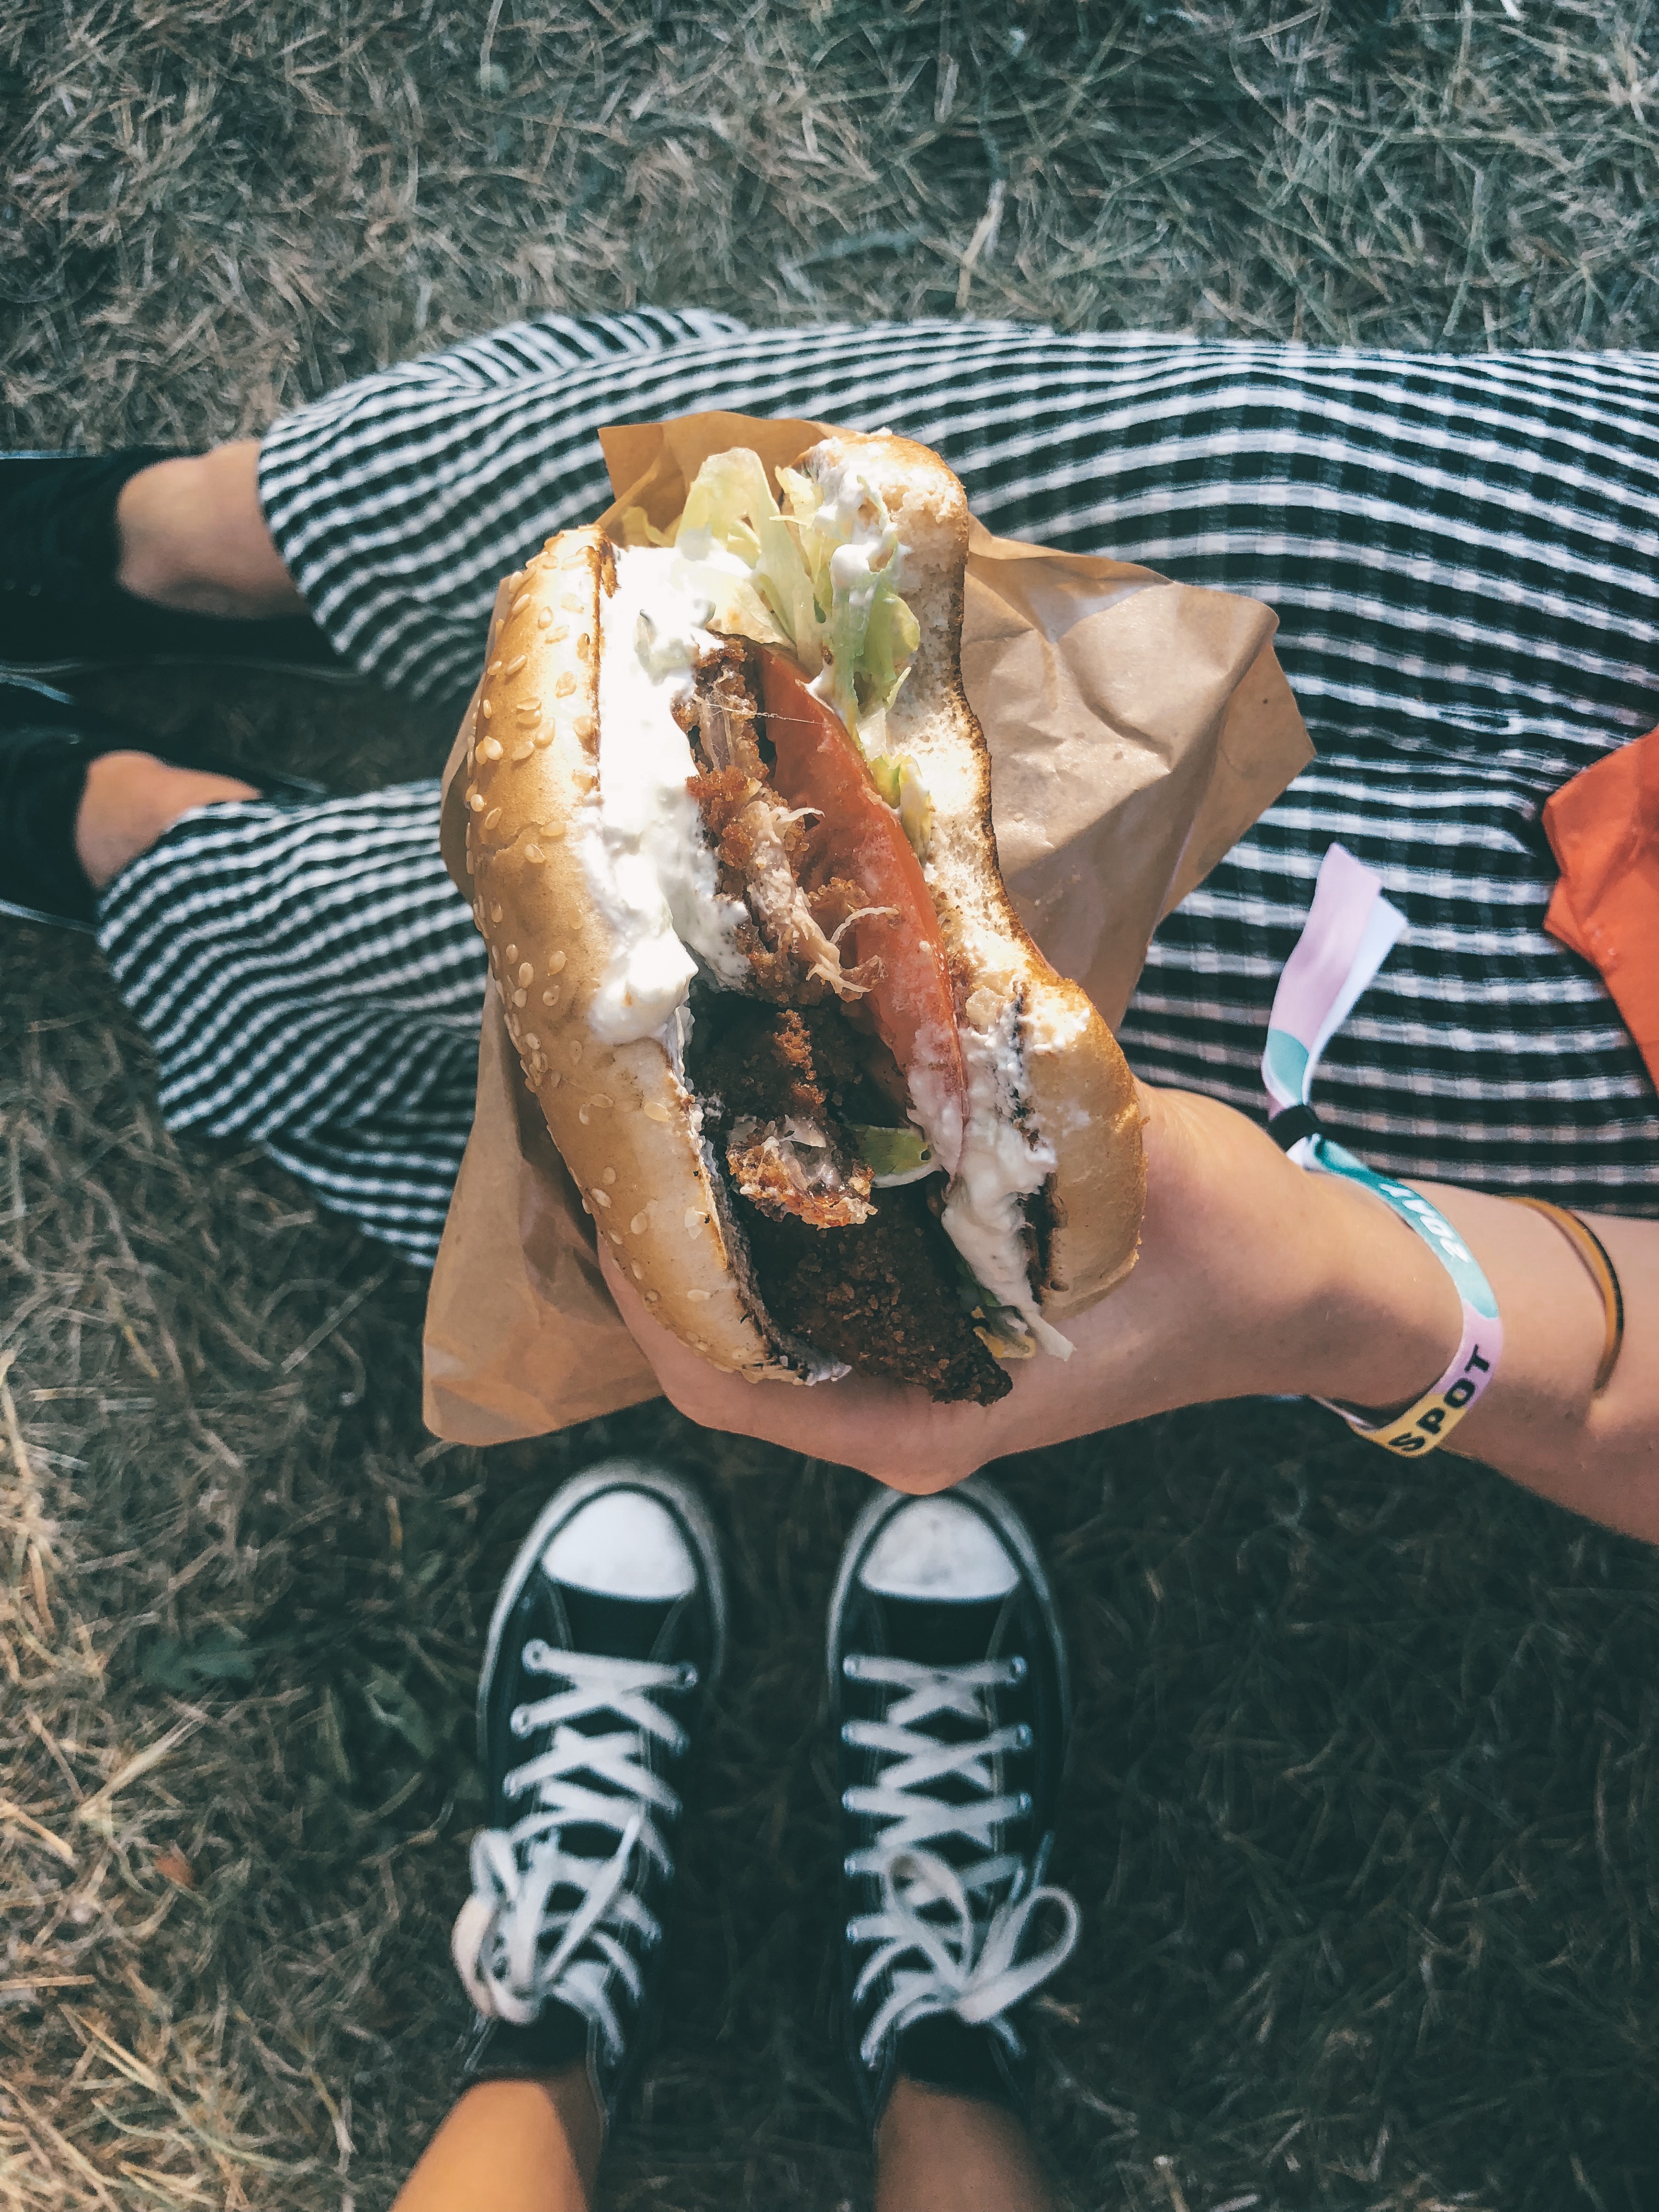 Girl eating a burger at an outdoor music festival in Tallinn, Estonia